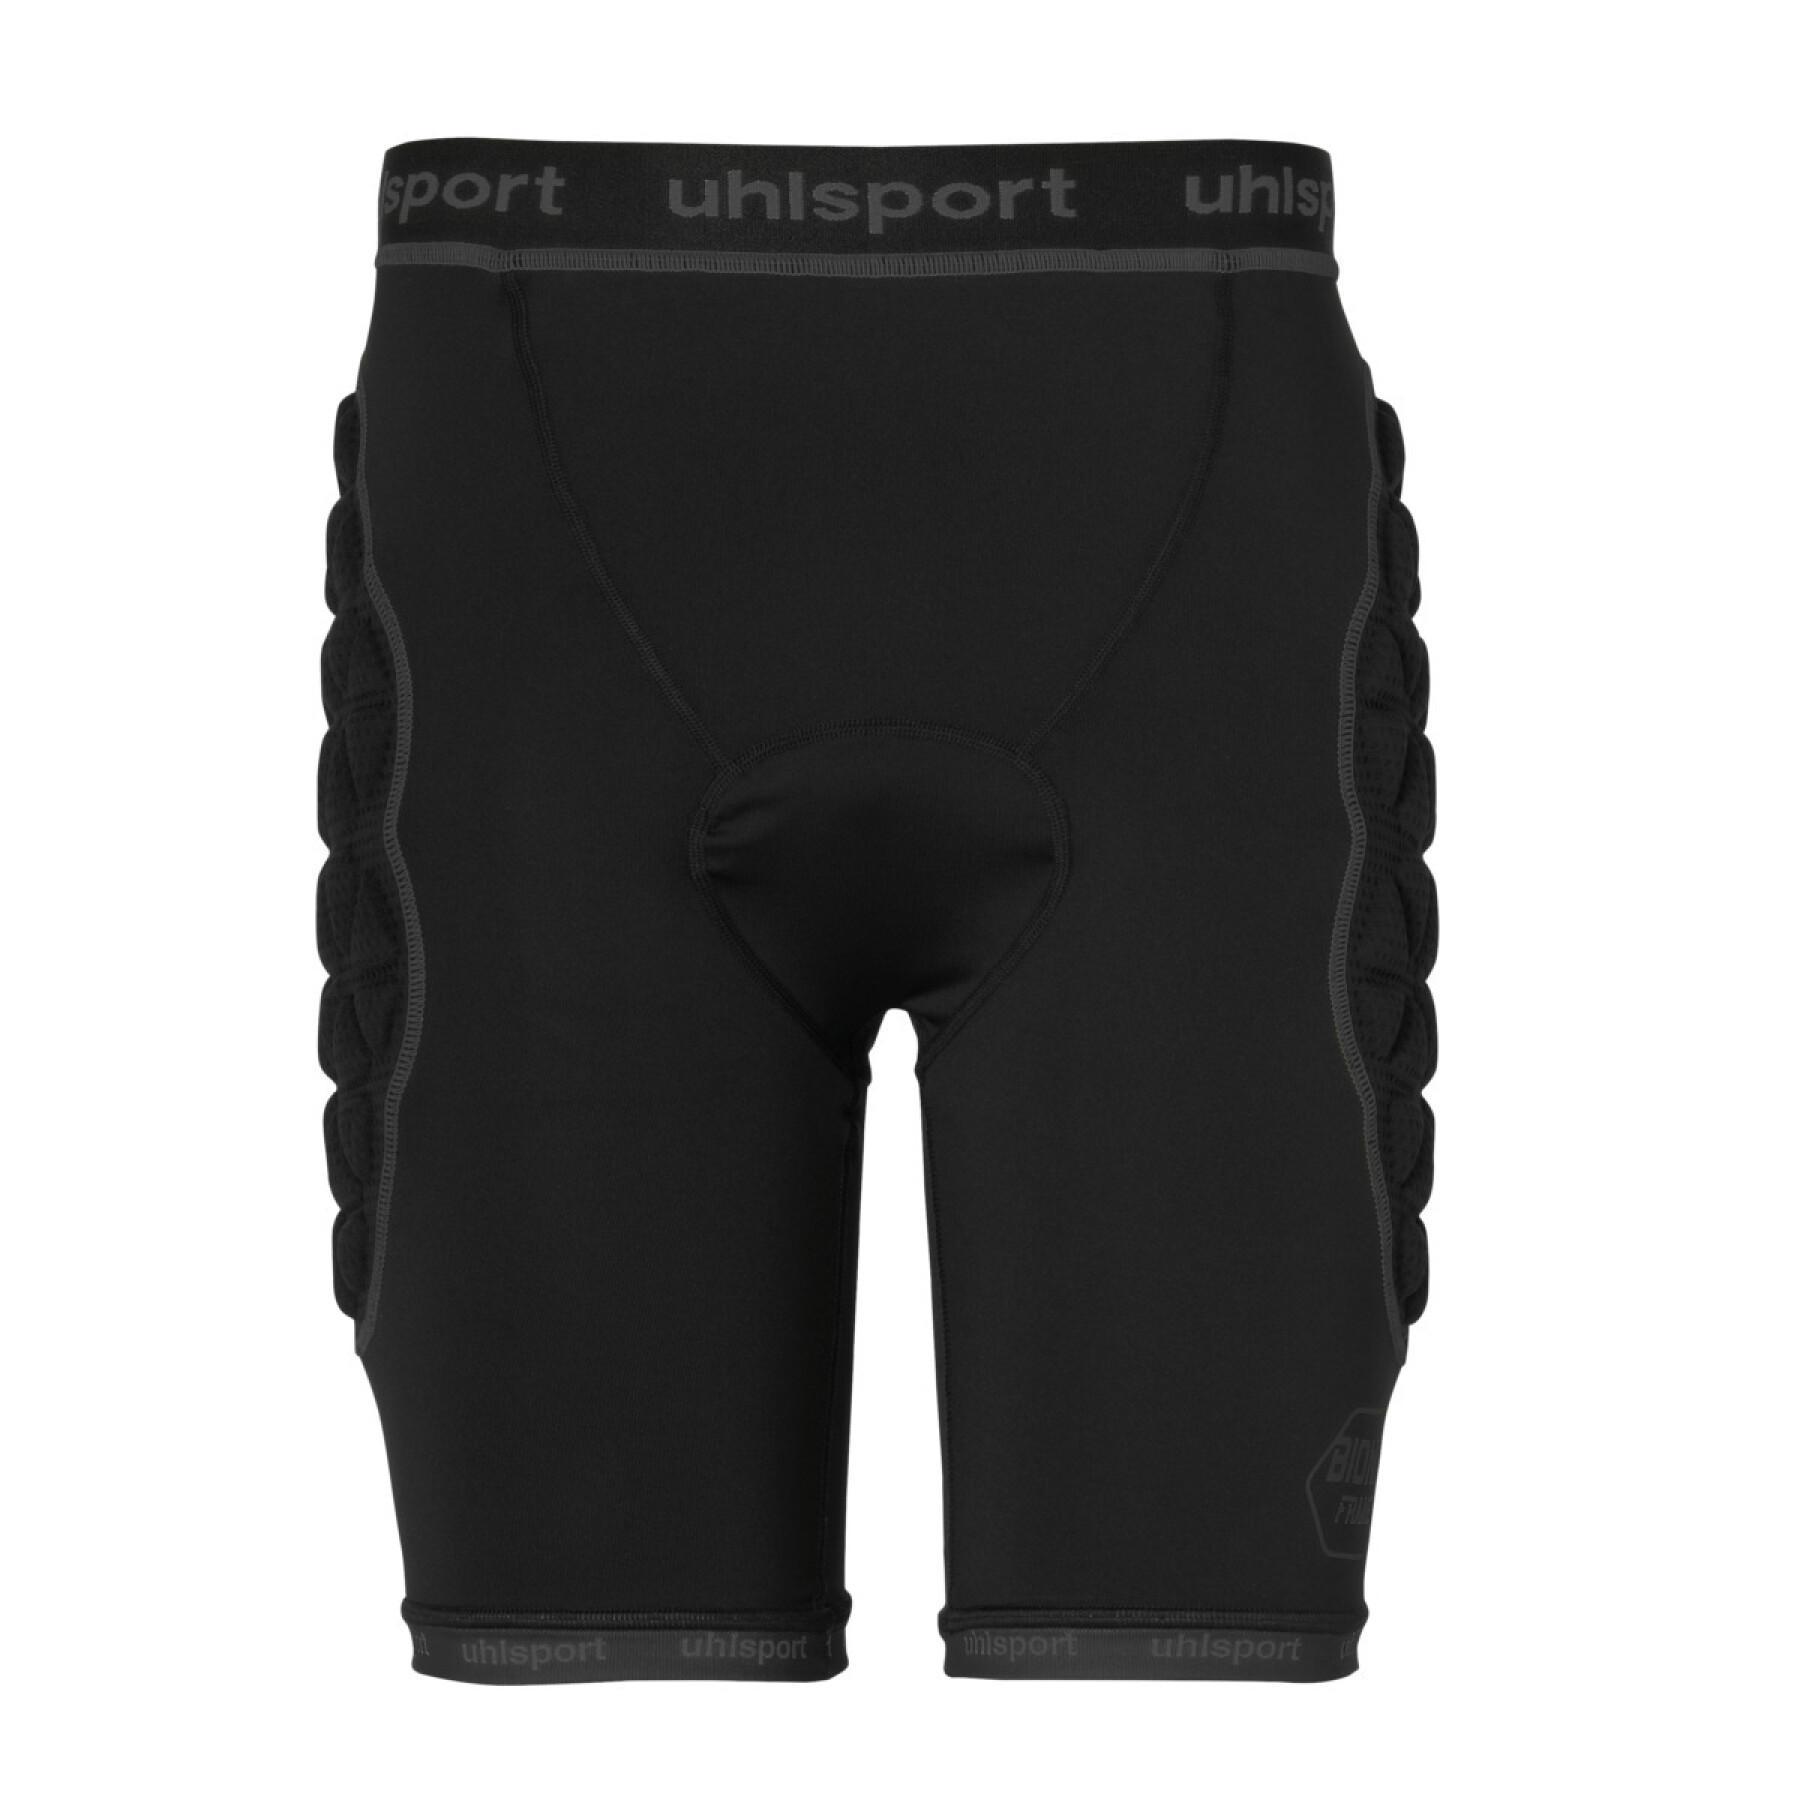 Rambourrée shorts Uhlsport Bionikframe